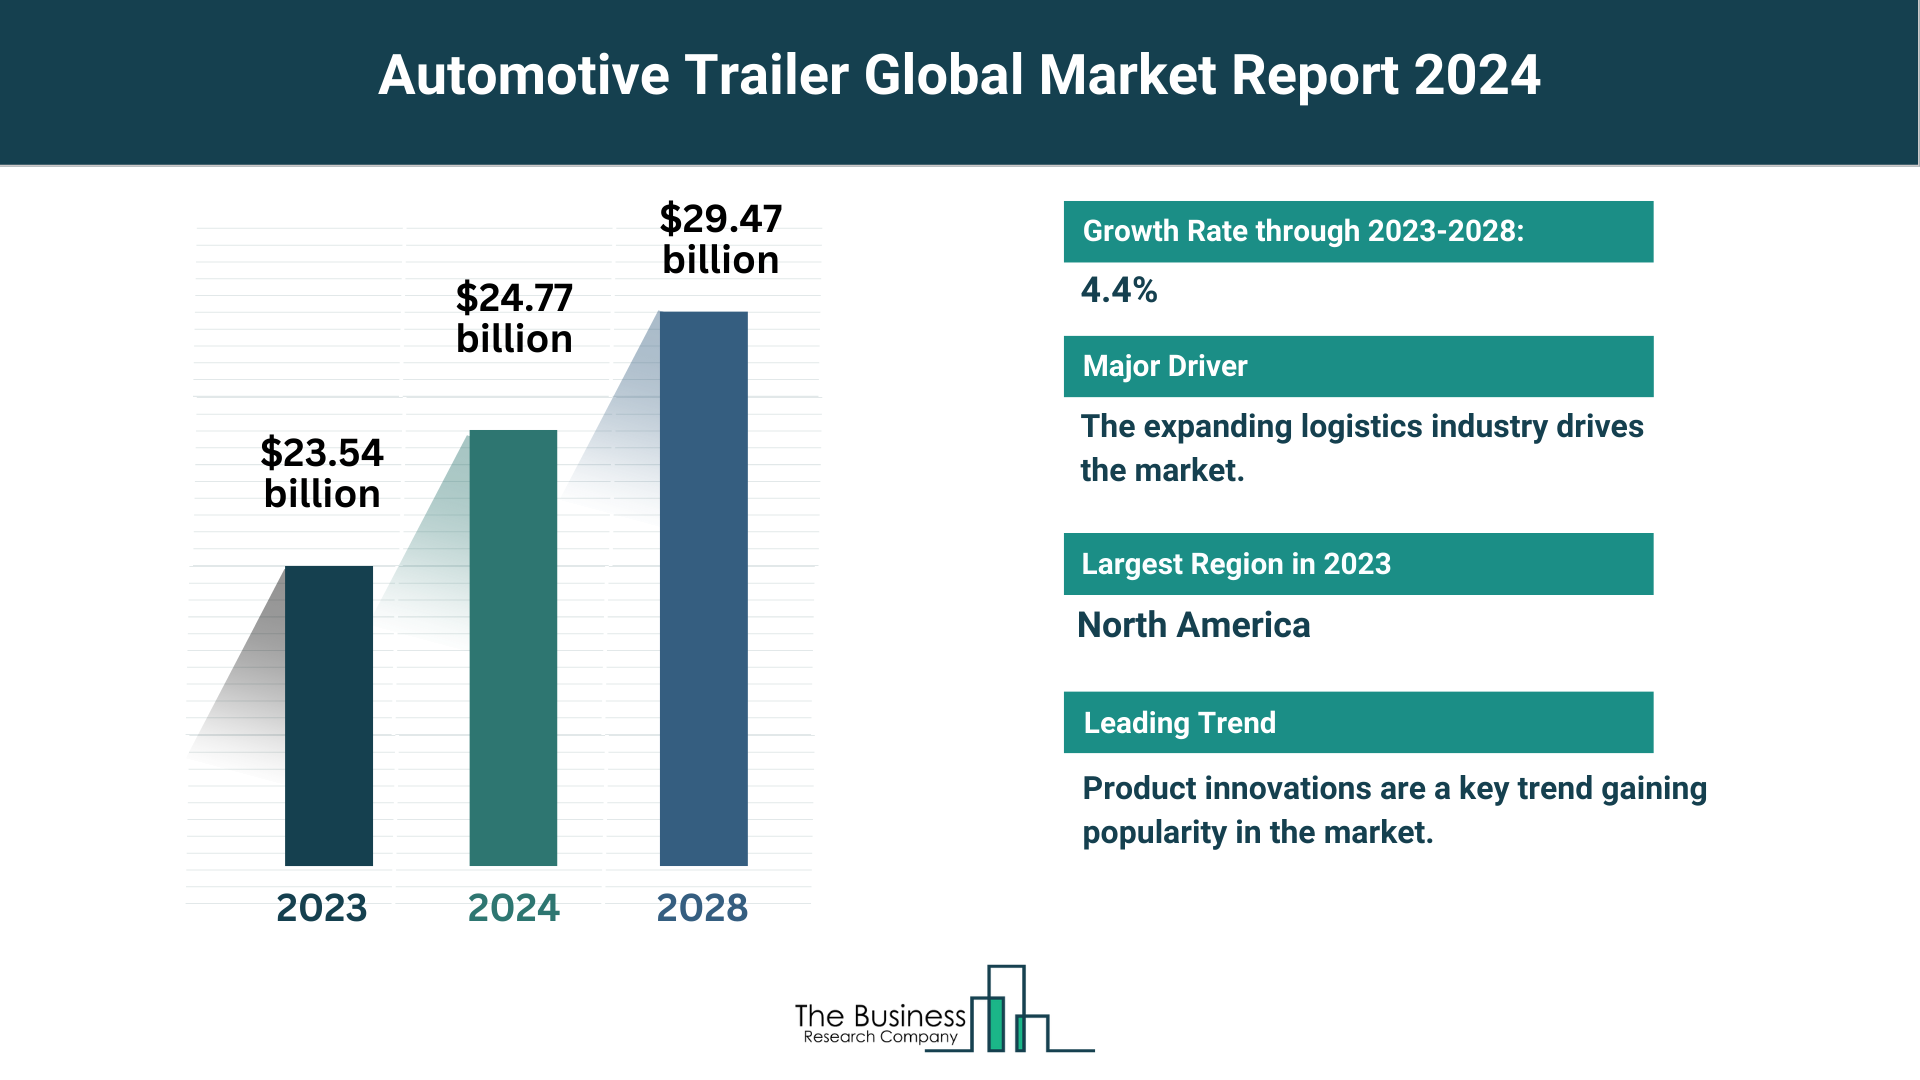 Global Automotive Trailer Market